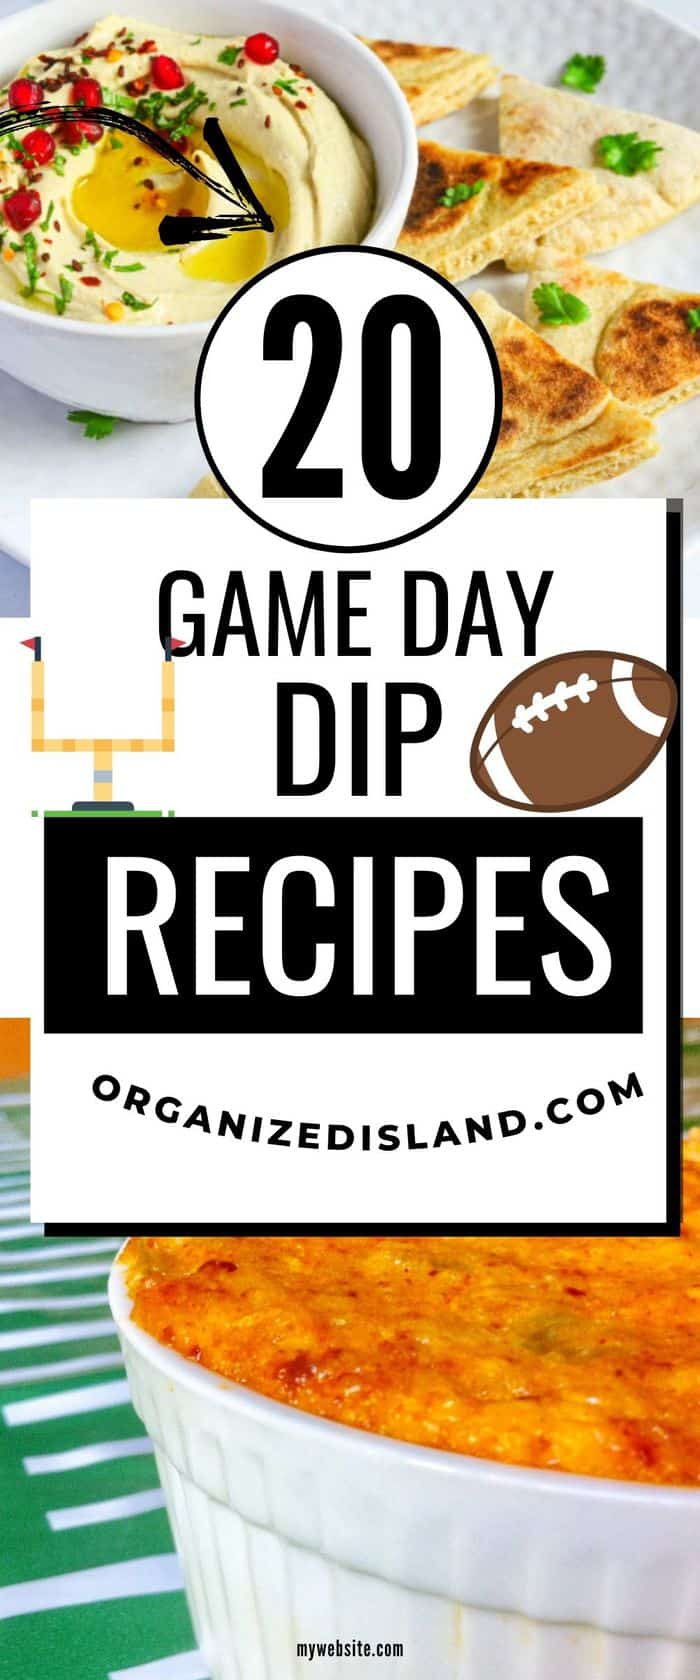 Game Day Dip Recipes